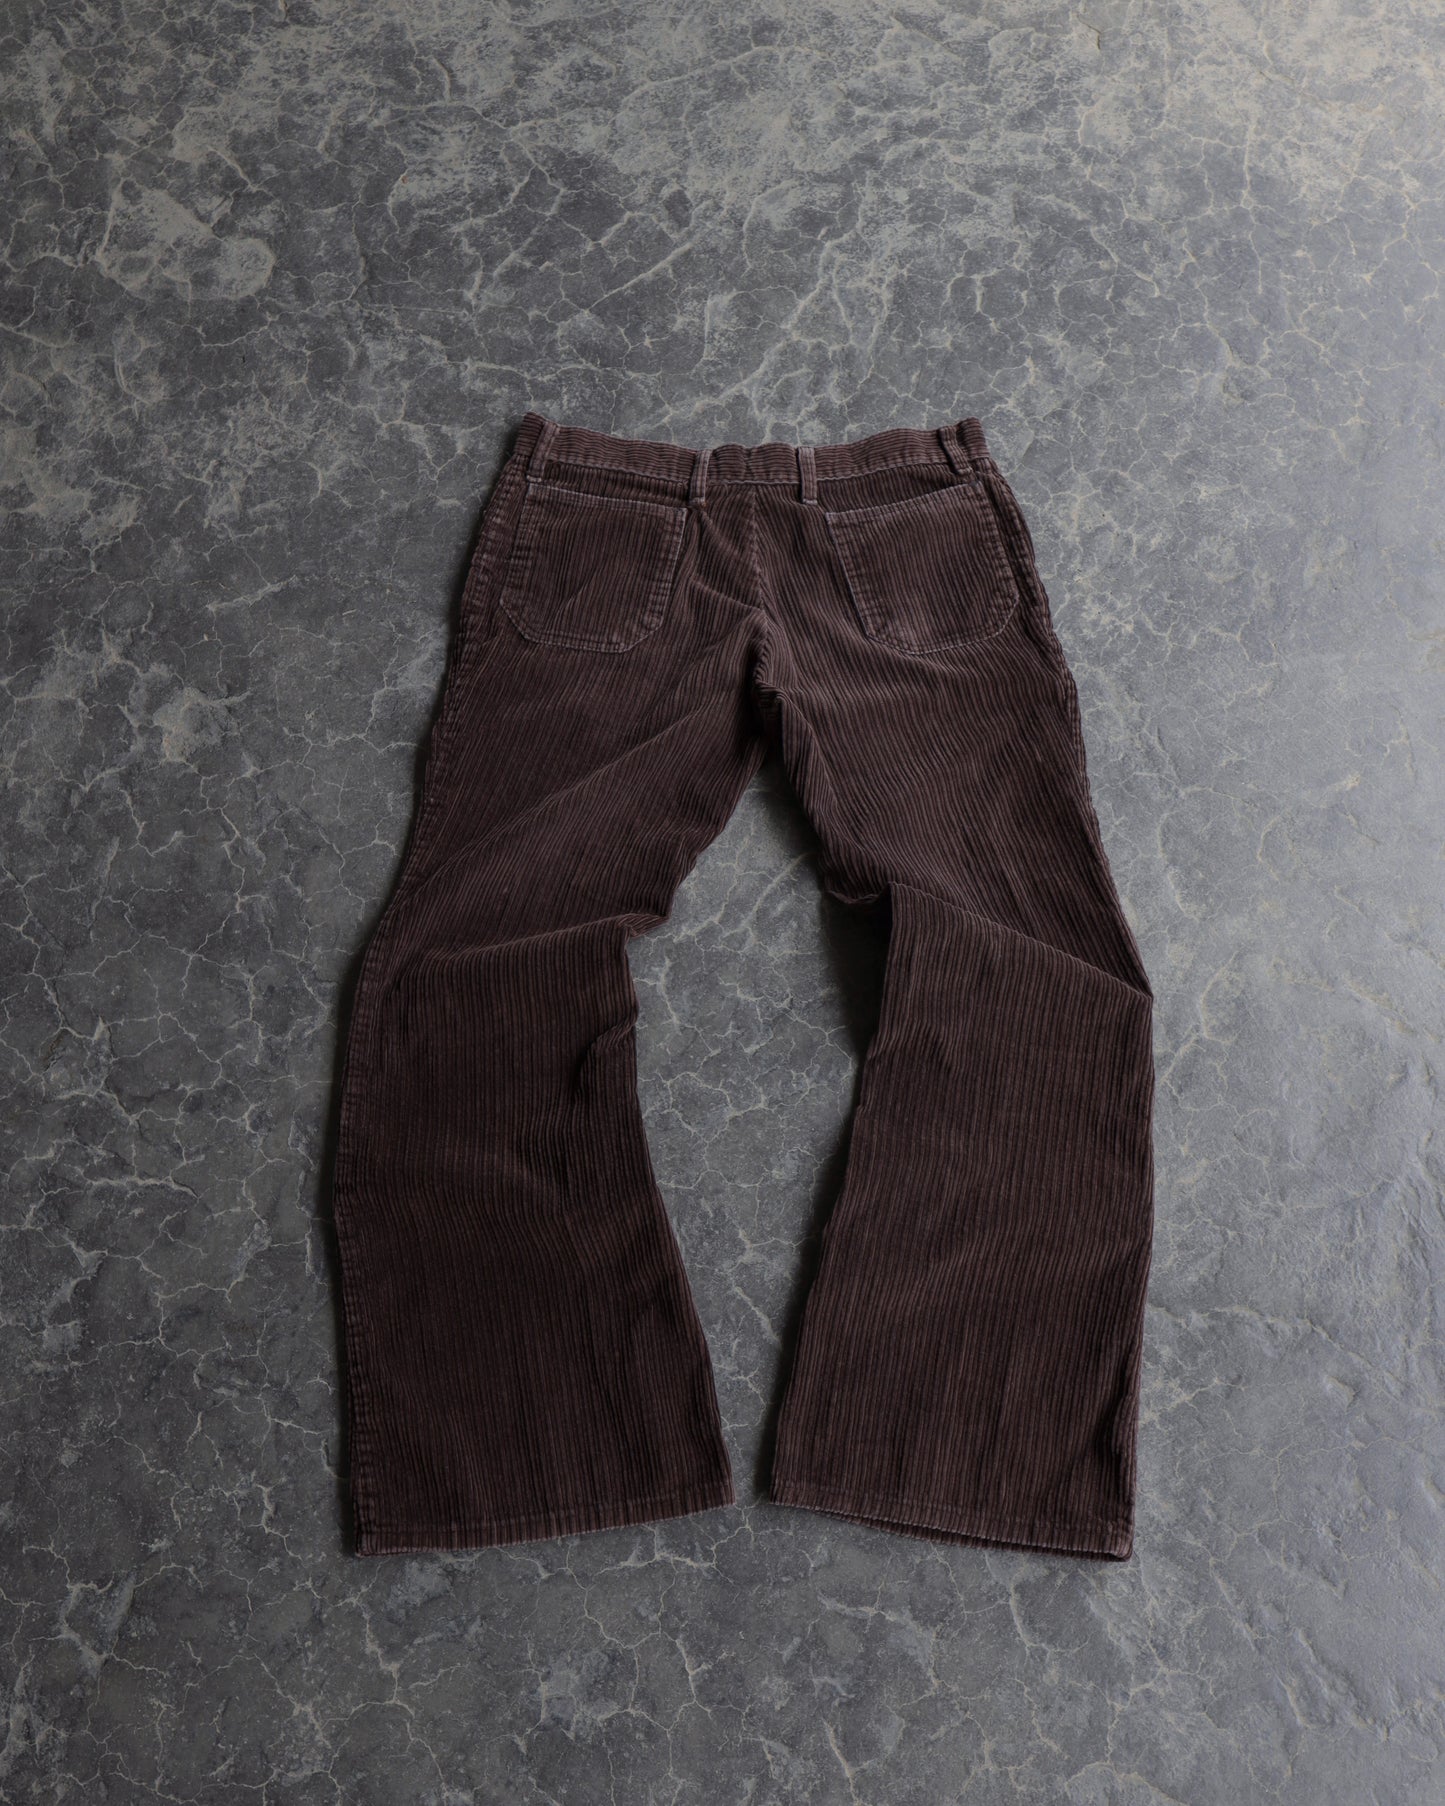 70s Brown Corduroy Flare Slacks Pants - M